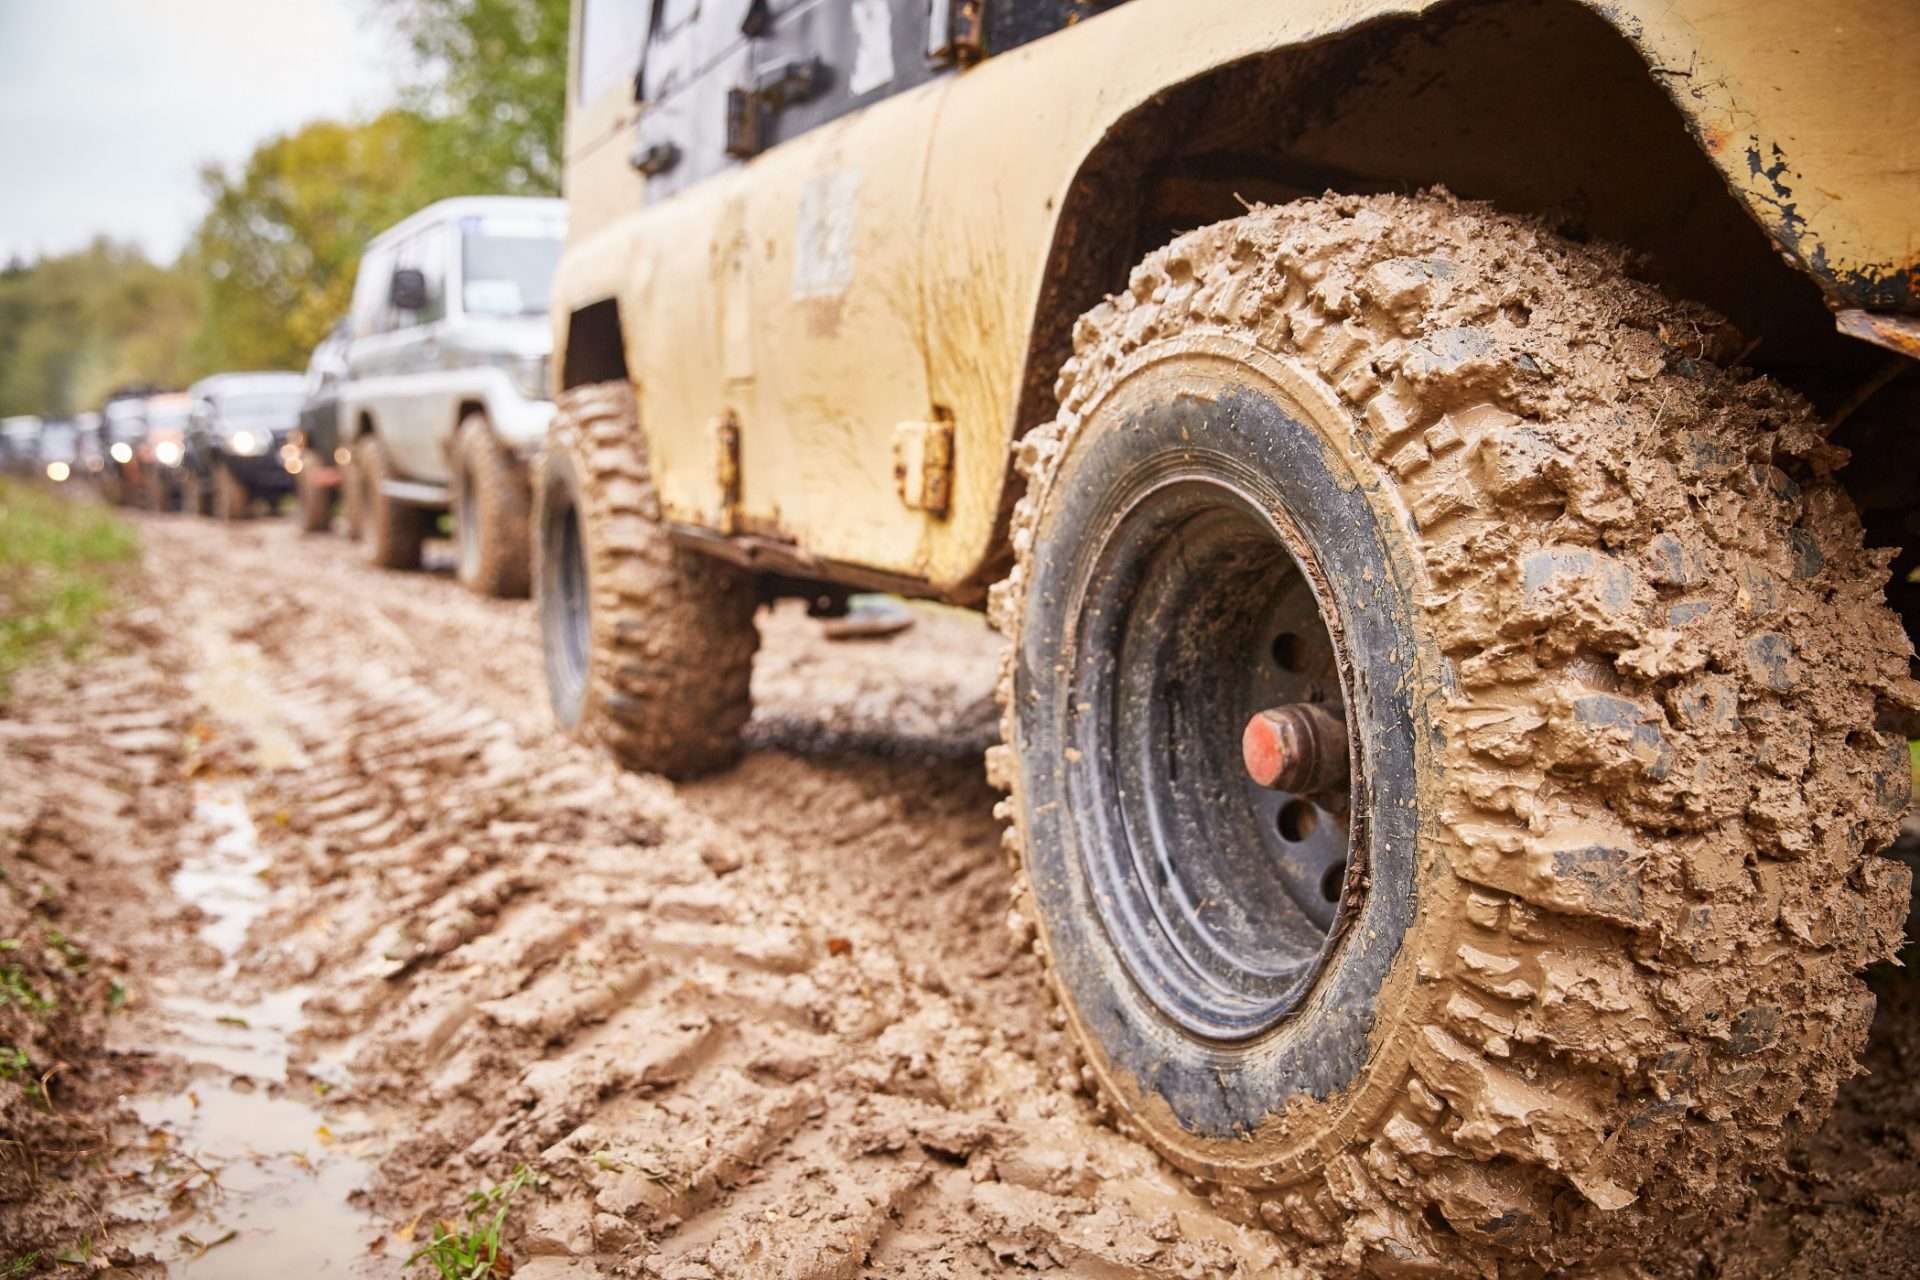 Vehicles off roading through mud.